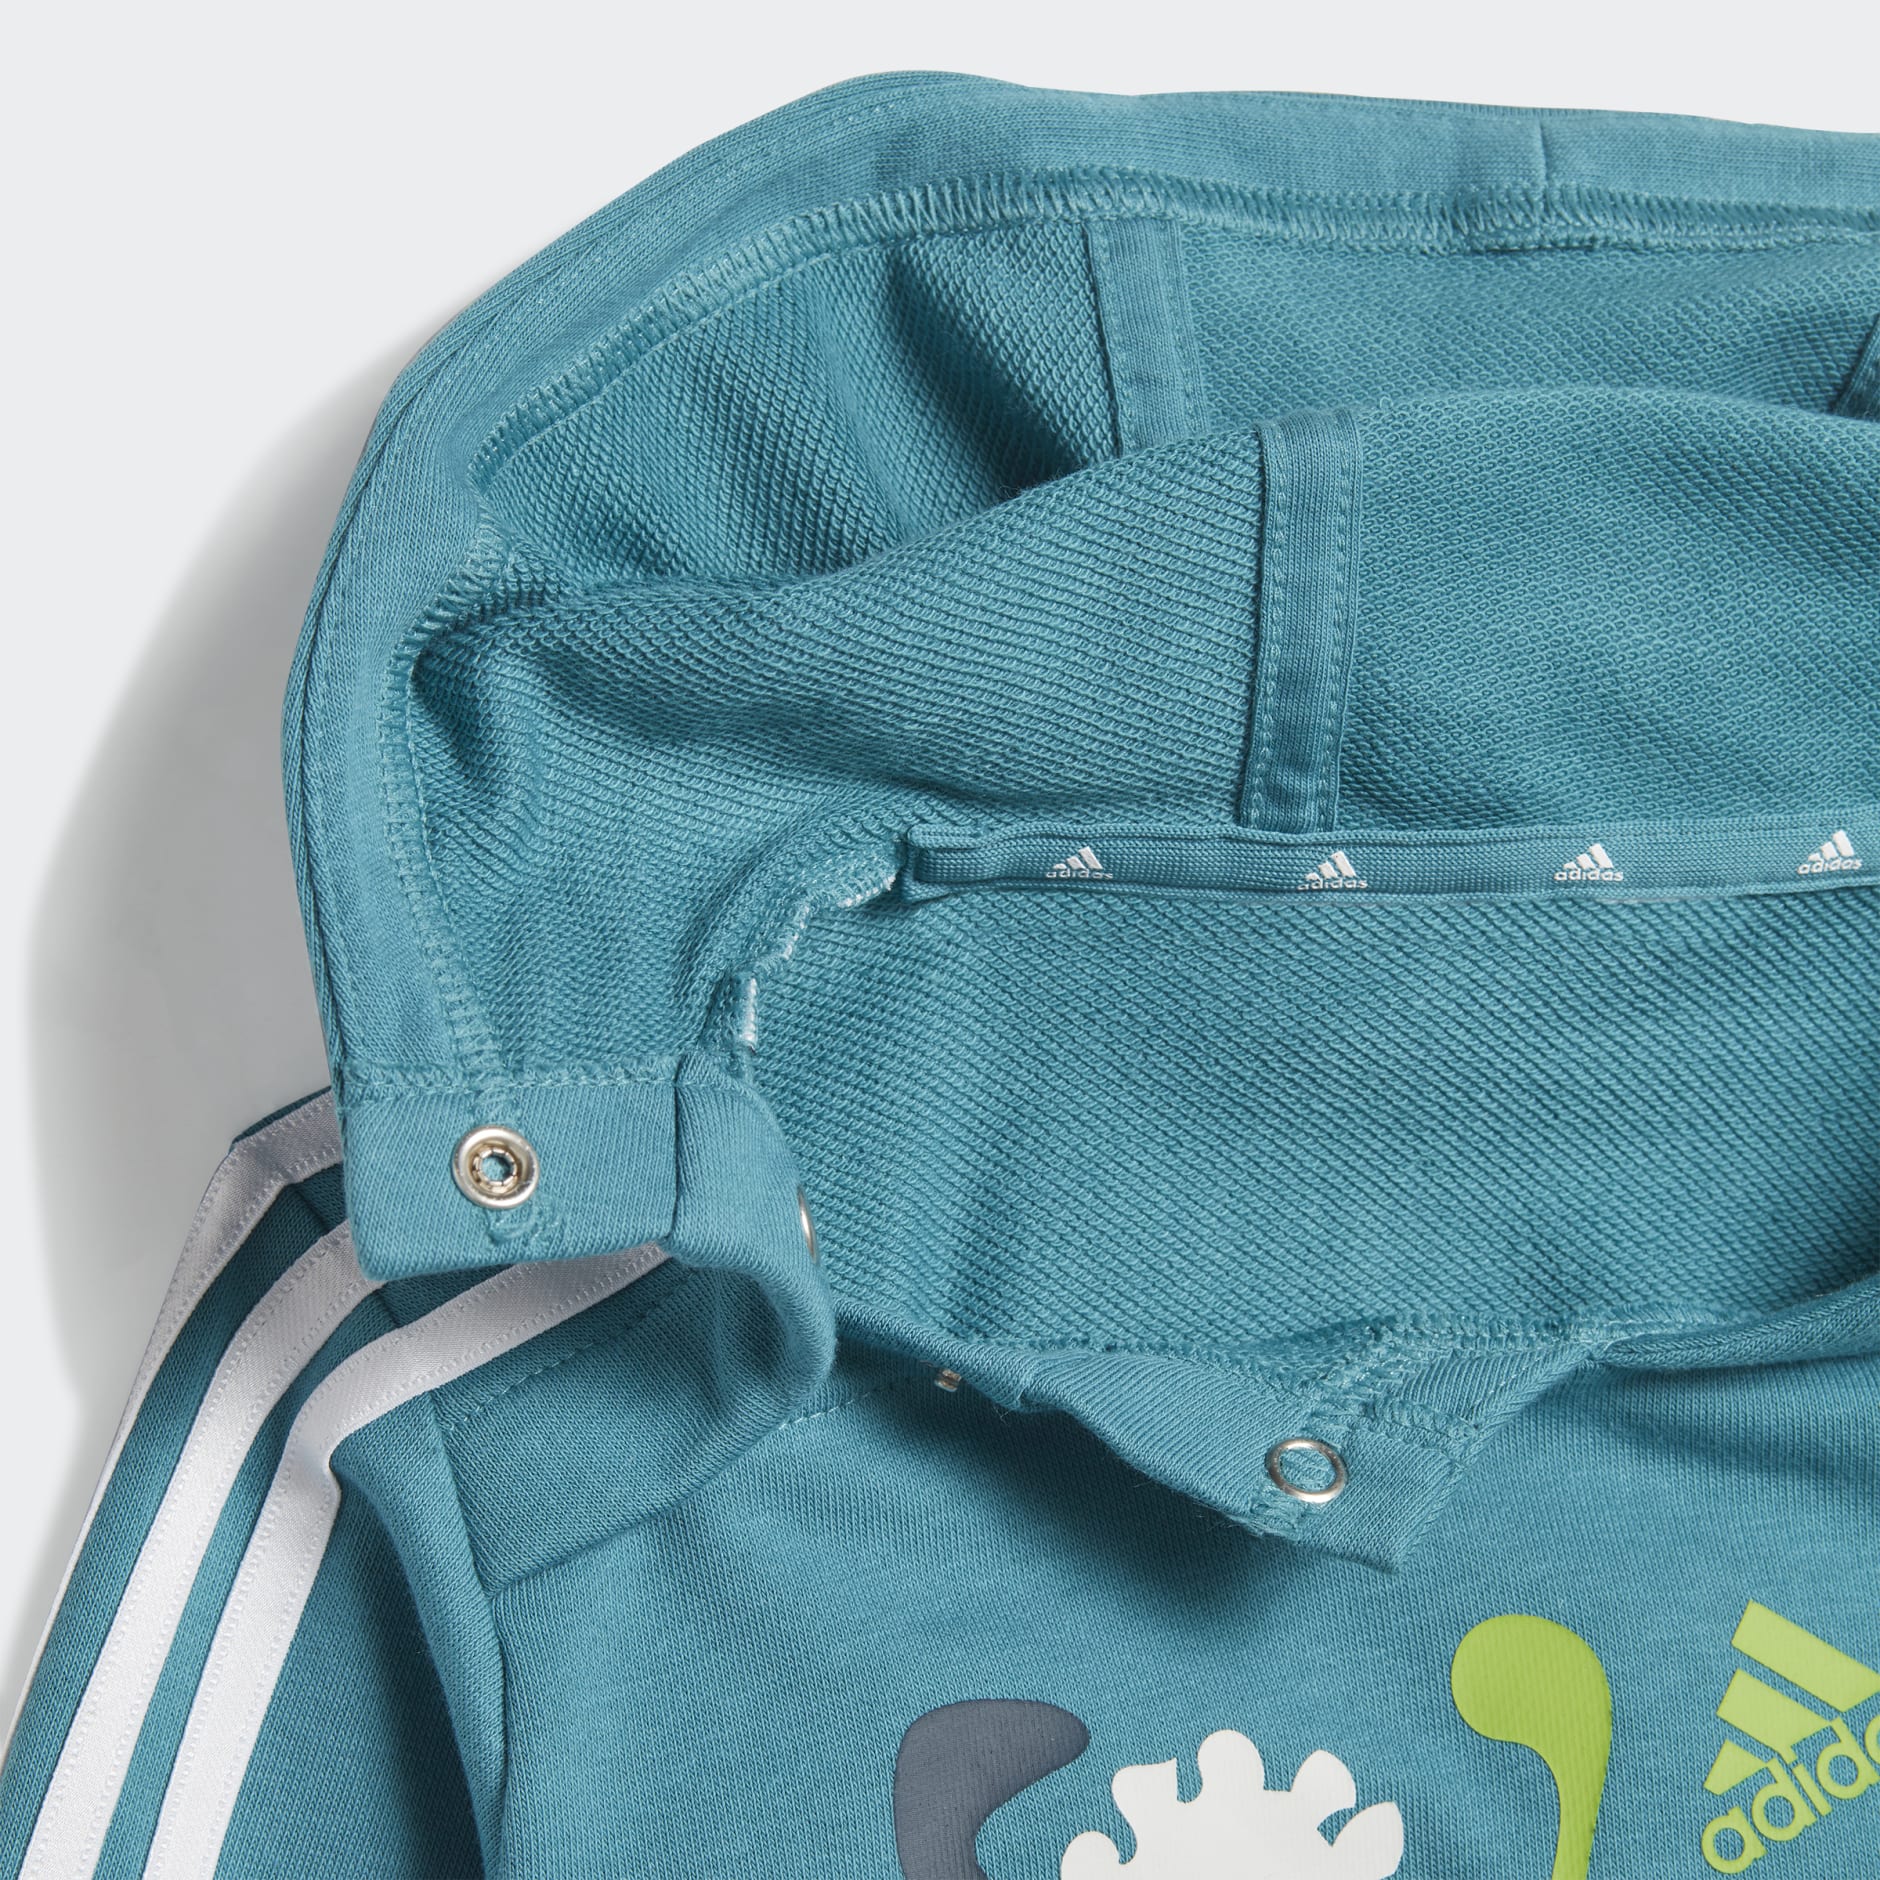 Kids Clothing - Dino Camo Allover Print French Terry Jogger Set - Turquoise  | adidas Saudi Arabia